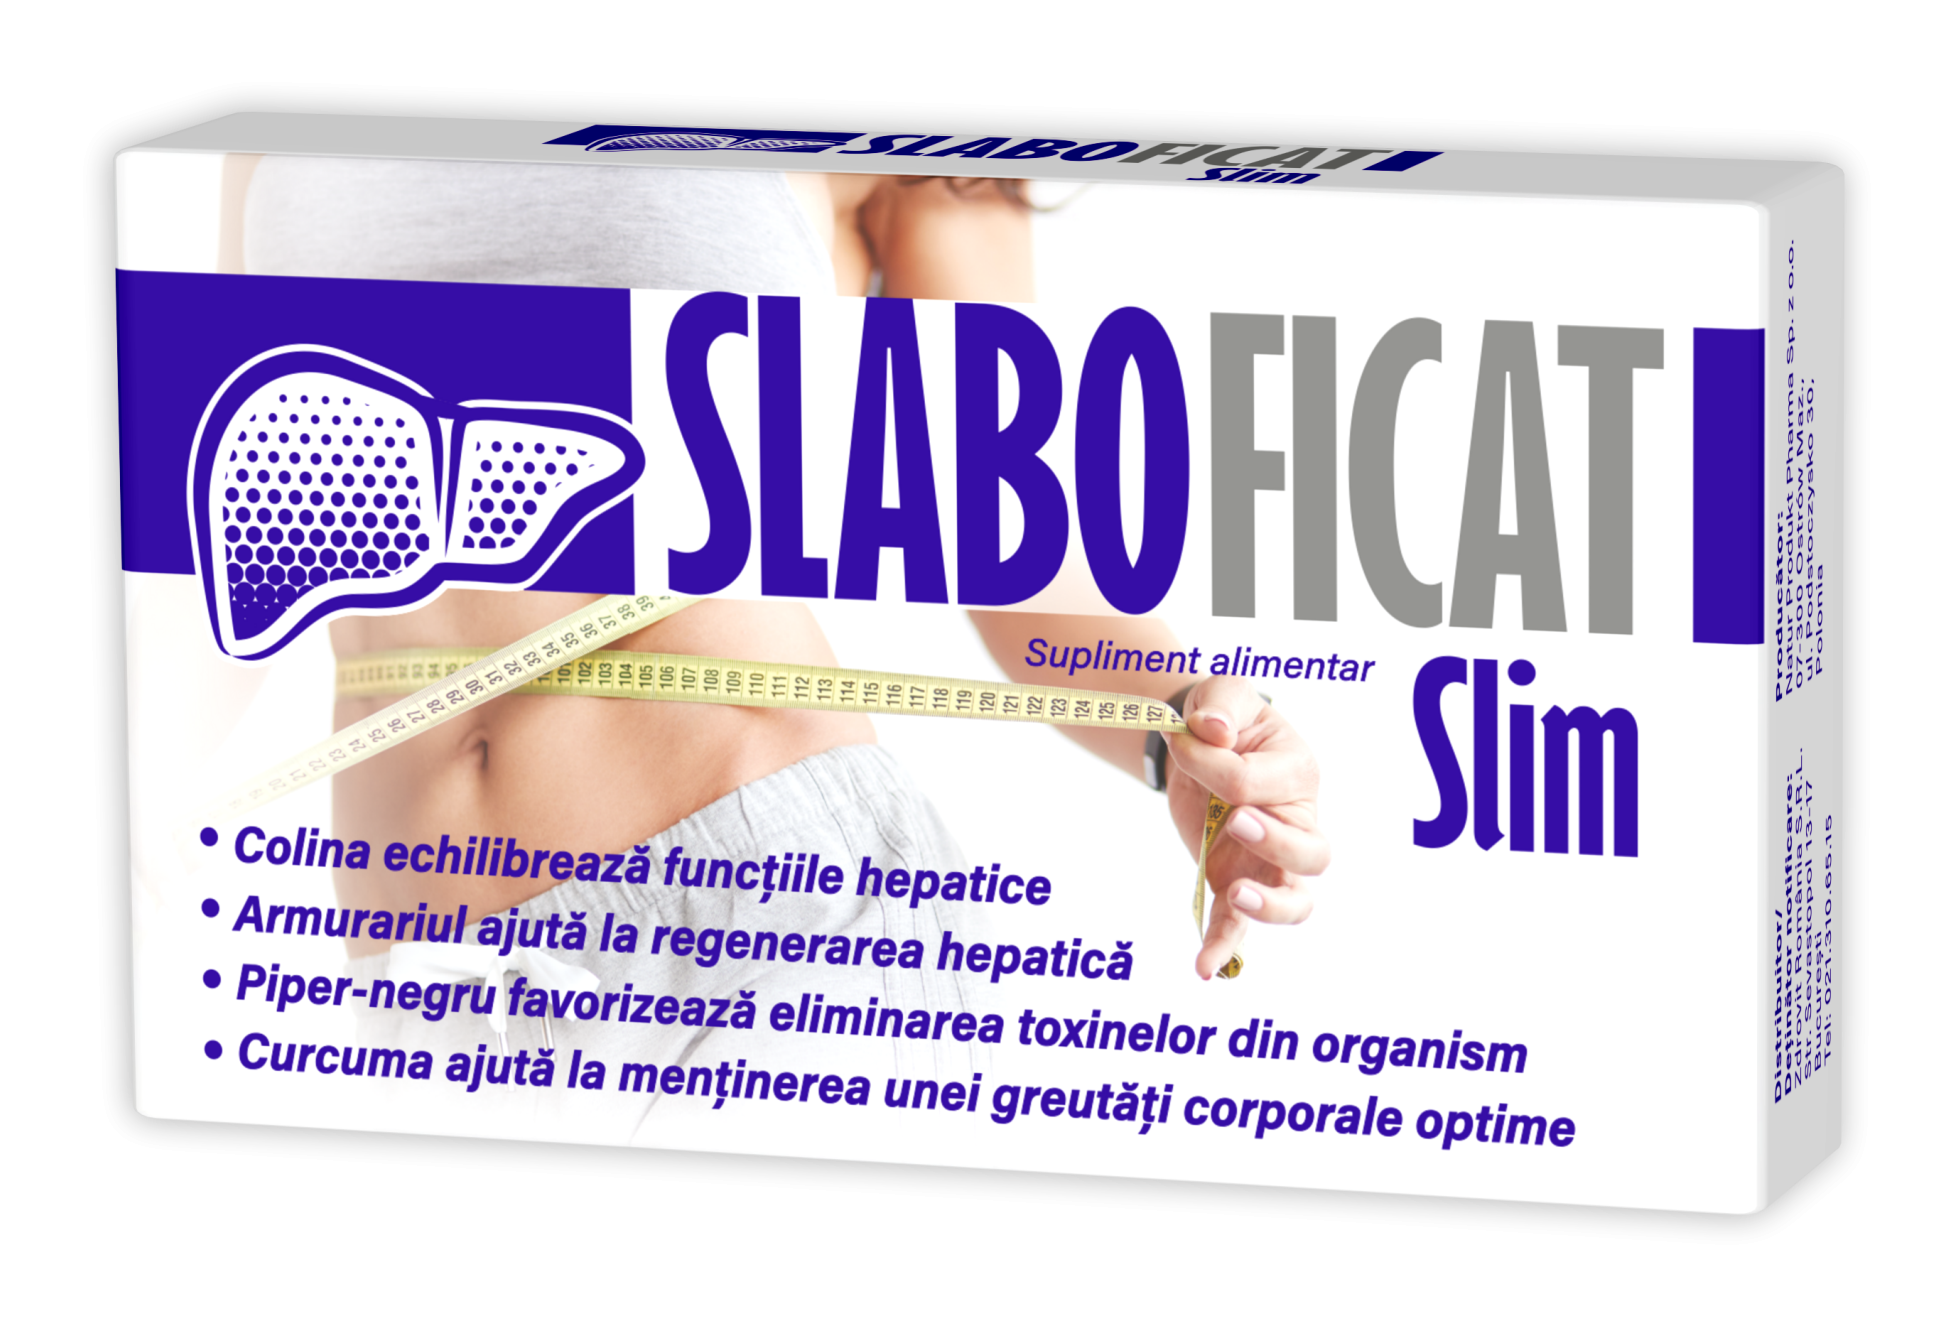 Afecțiuni digestive - ZDROVIT SLABOFICAT SLIM 30CAPS, axafarm.ro